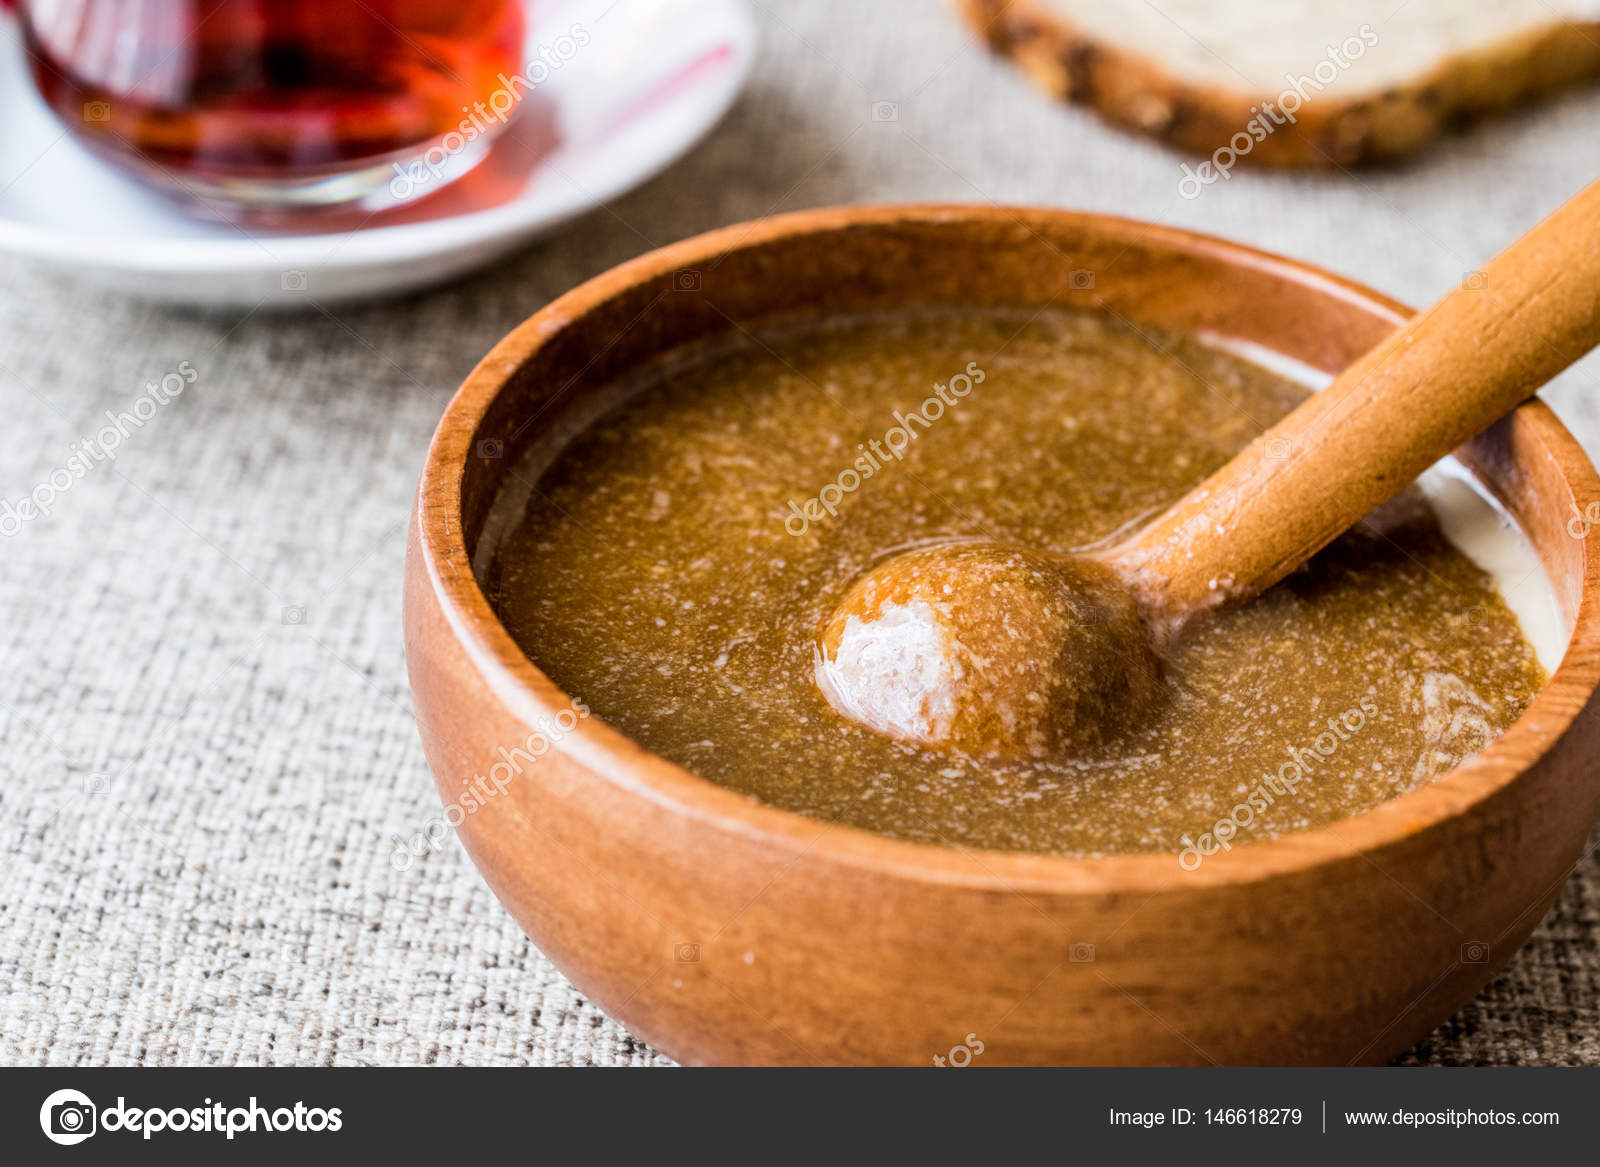 Turkish Tahini & Molasses Spread (Tahin Pekmez)